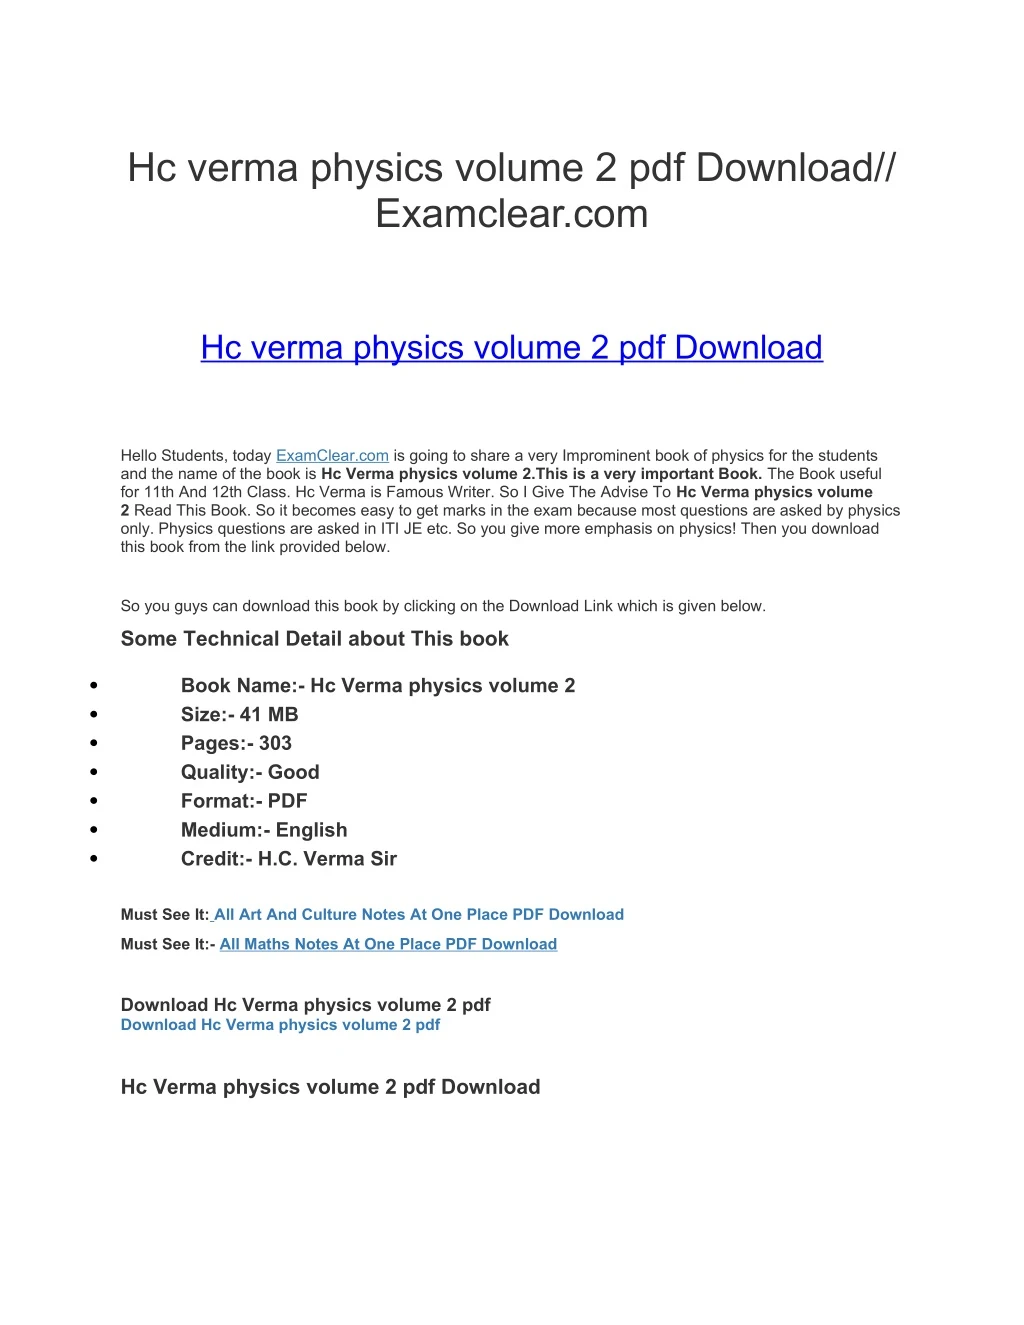 hc verma physics volume 2 pdf download examclear